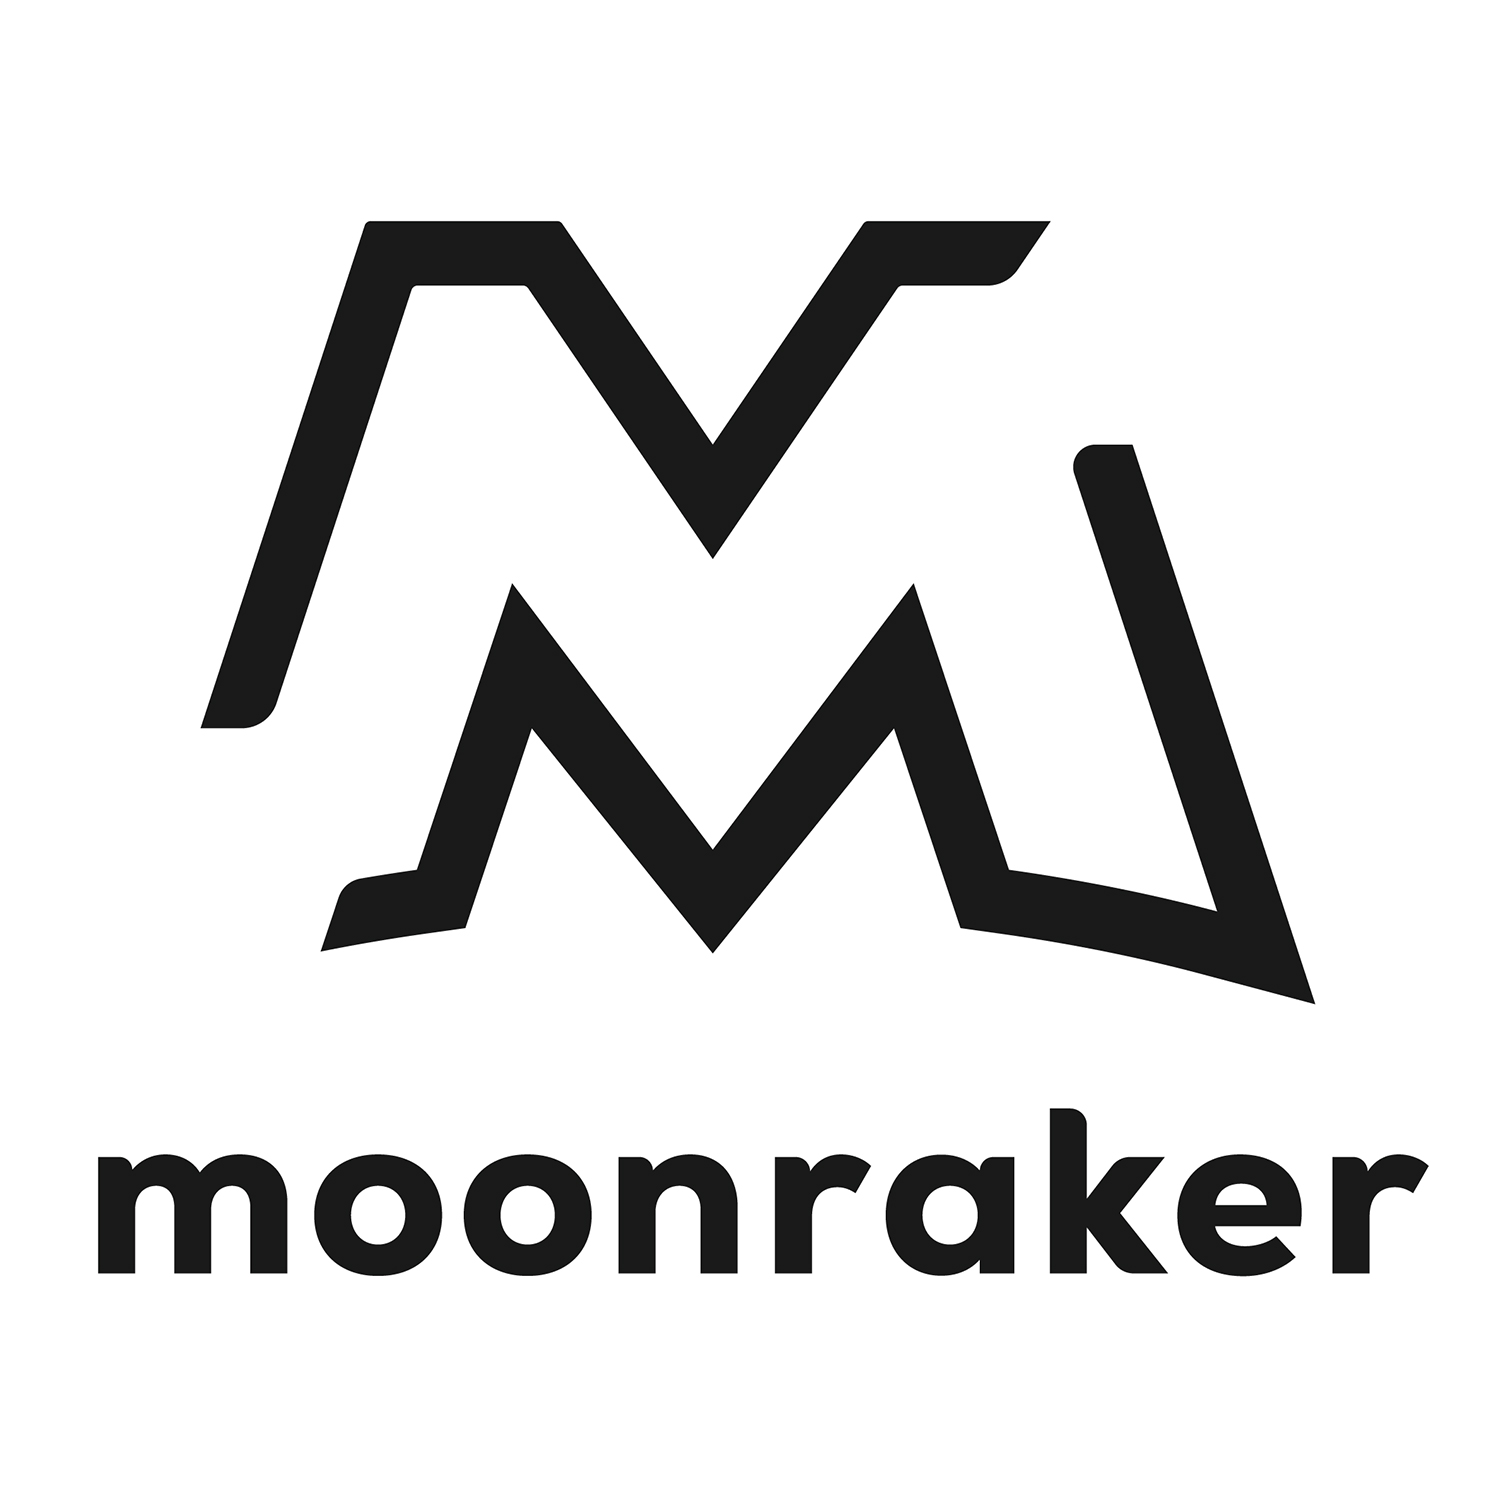 moonraker